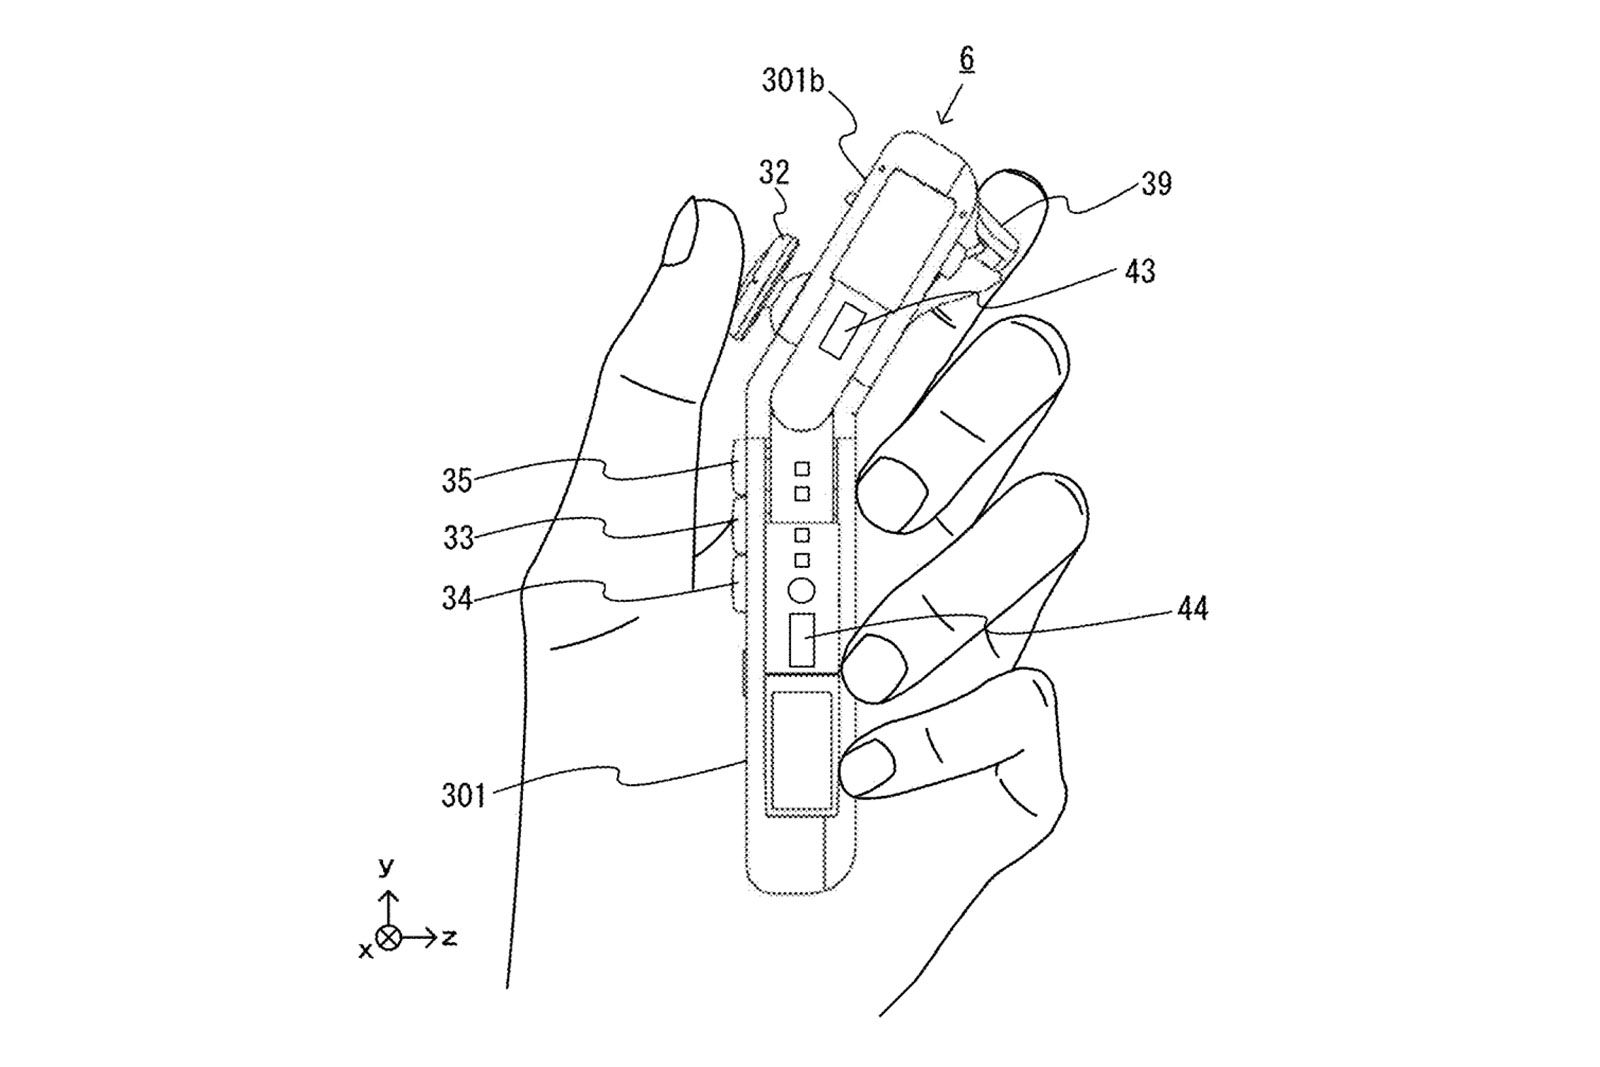 Nintendo Switch bending Joy-Cons patent images image 1